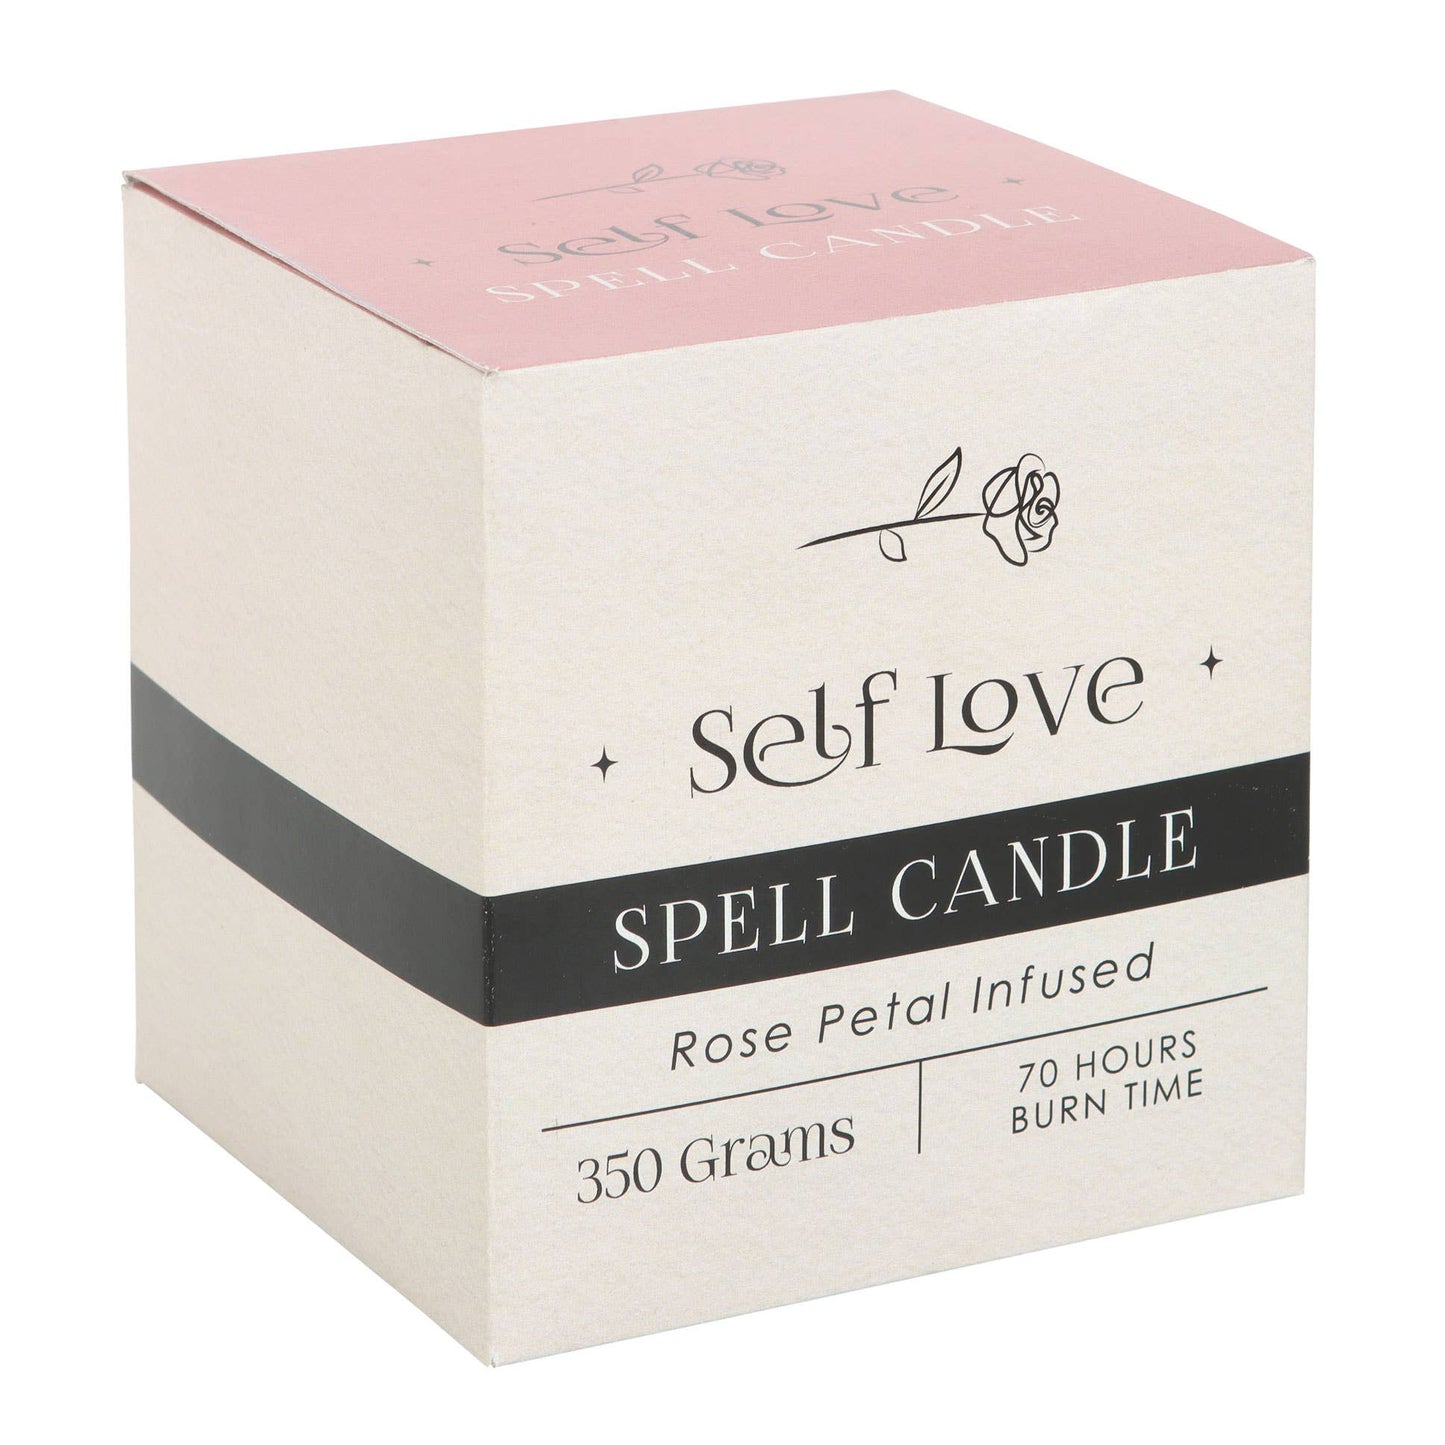 Rose Petal Infused Self Love Candle